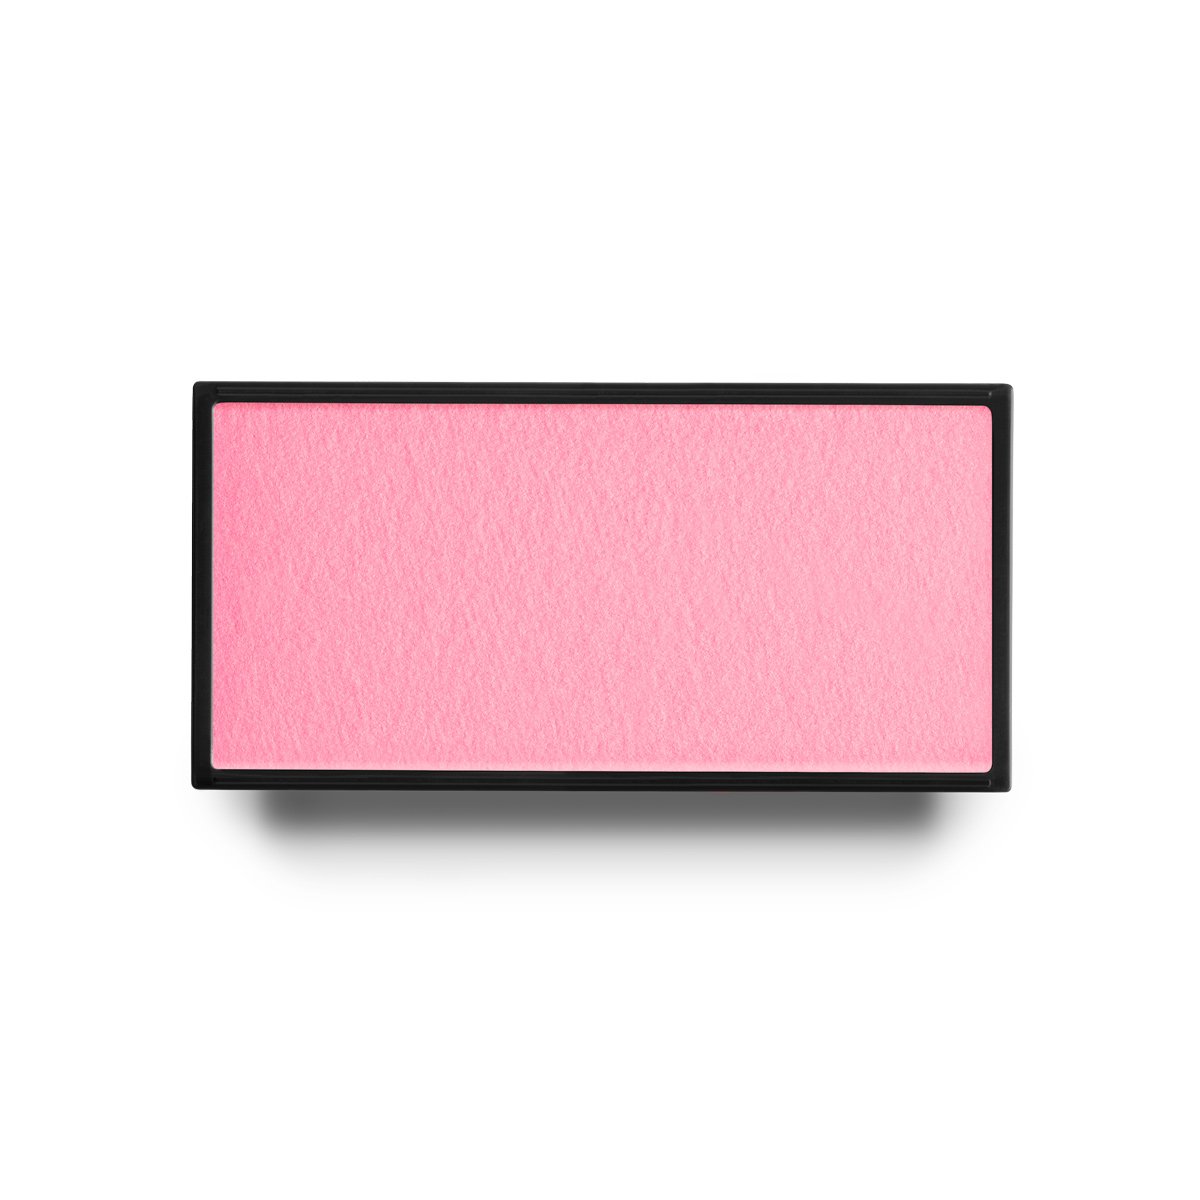 GUIMAUVE - SATIN PINK - satin finish powder blush in pink shade